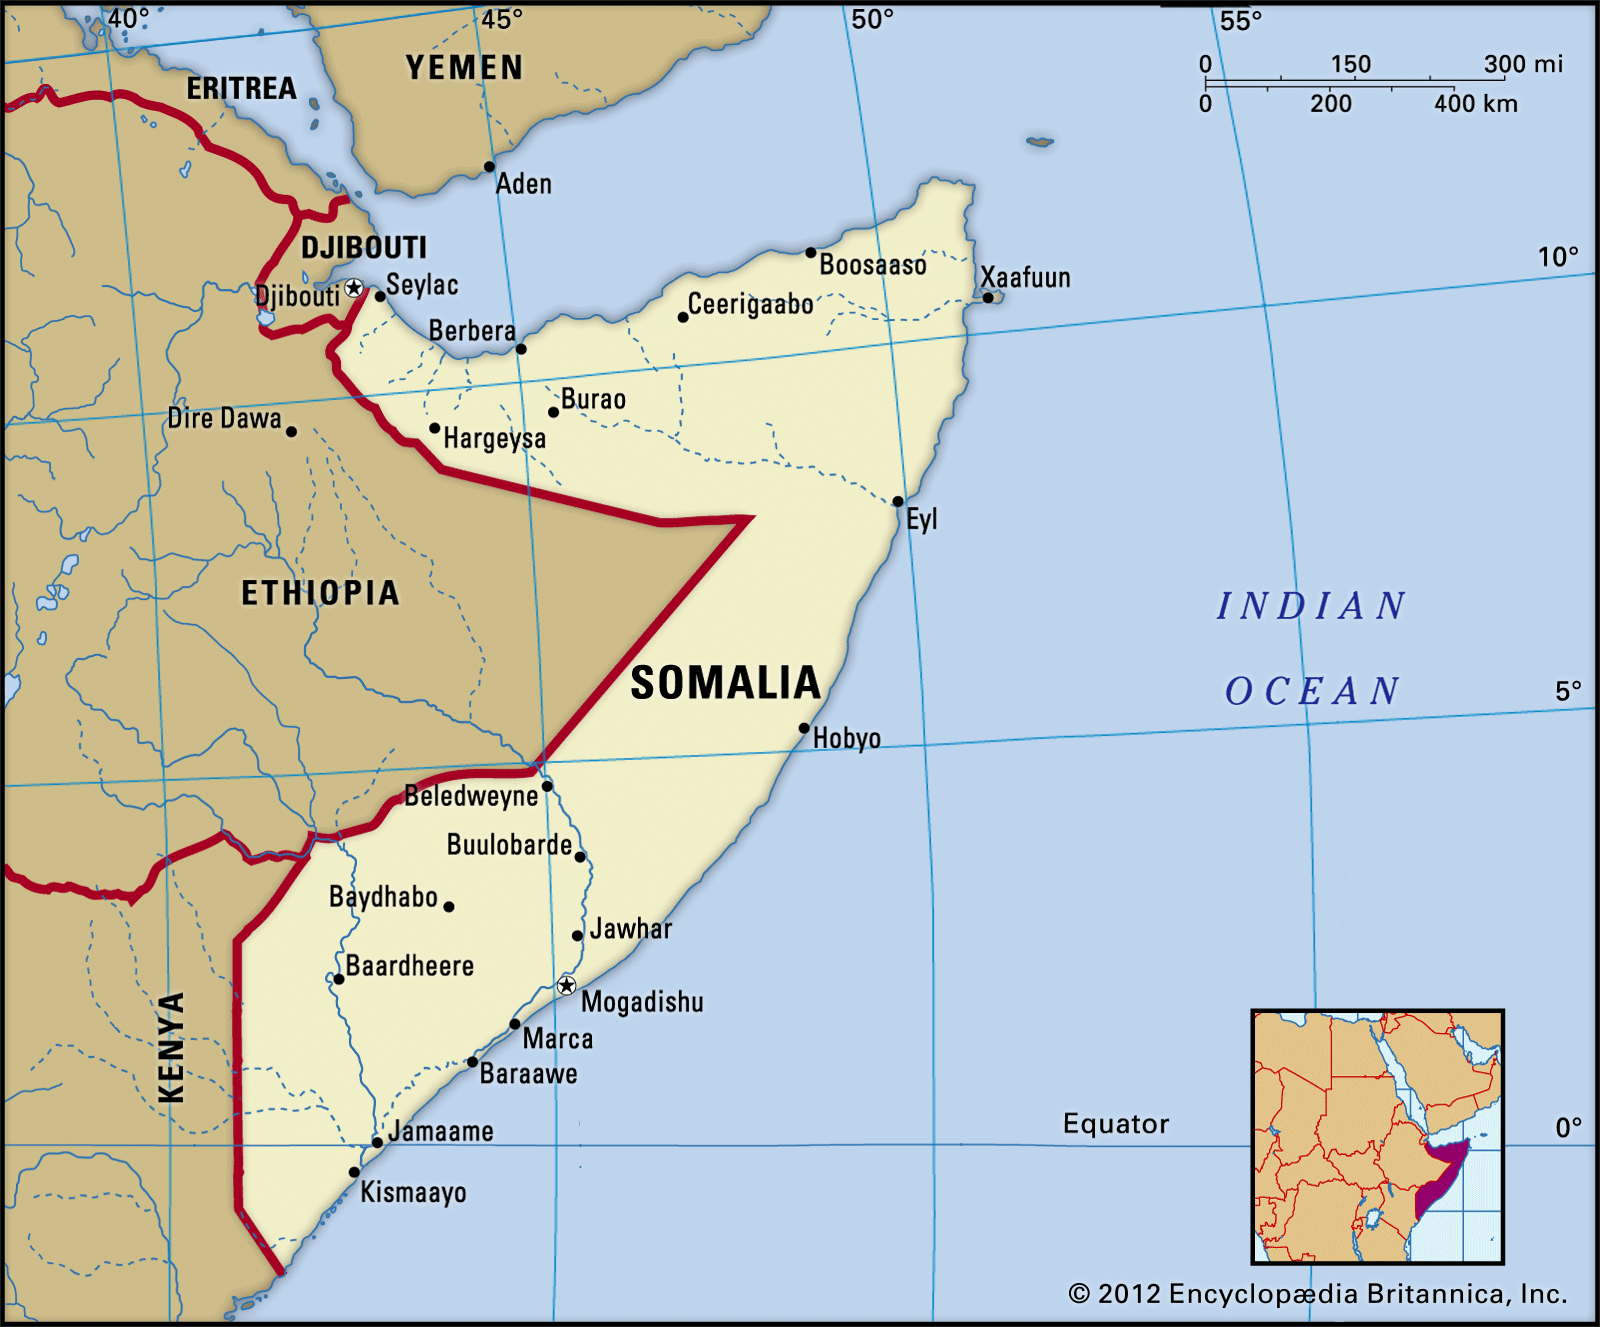 What is Somalia?